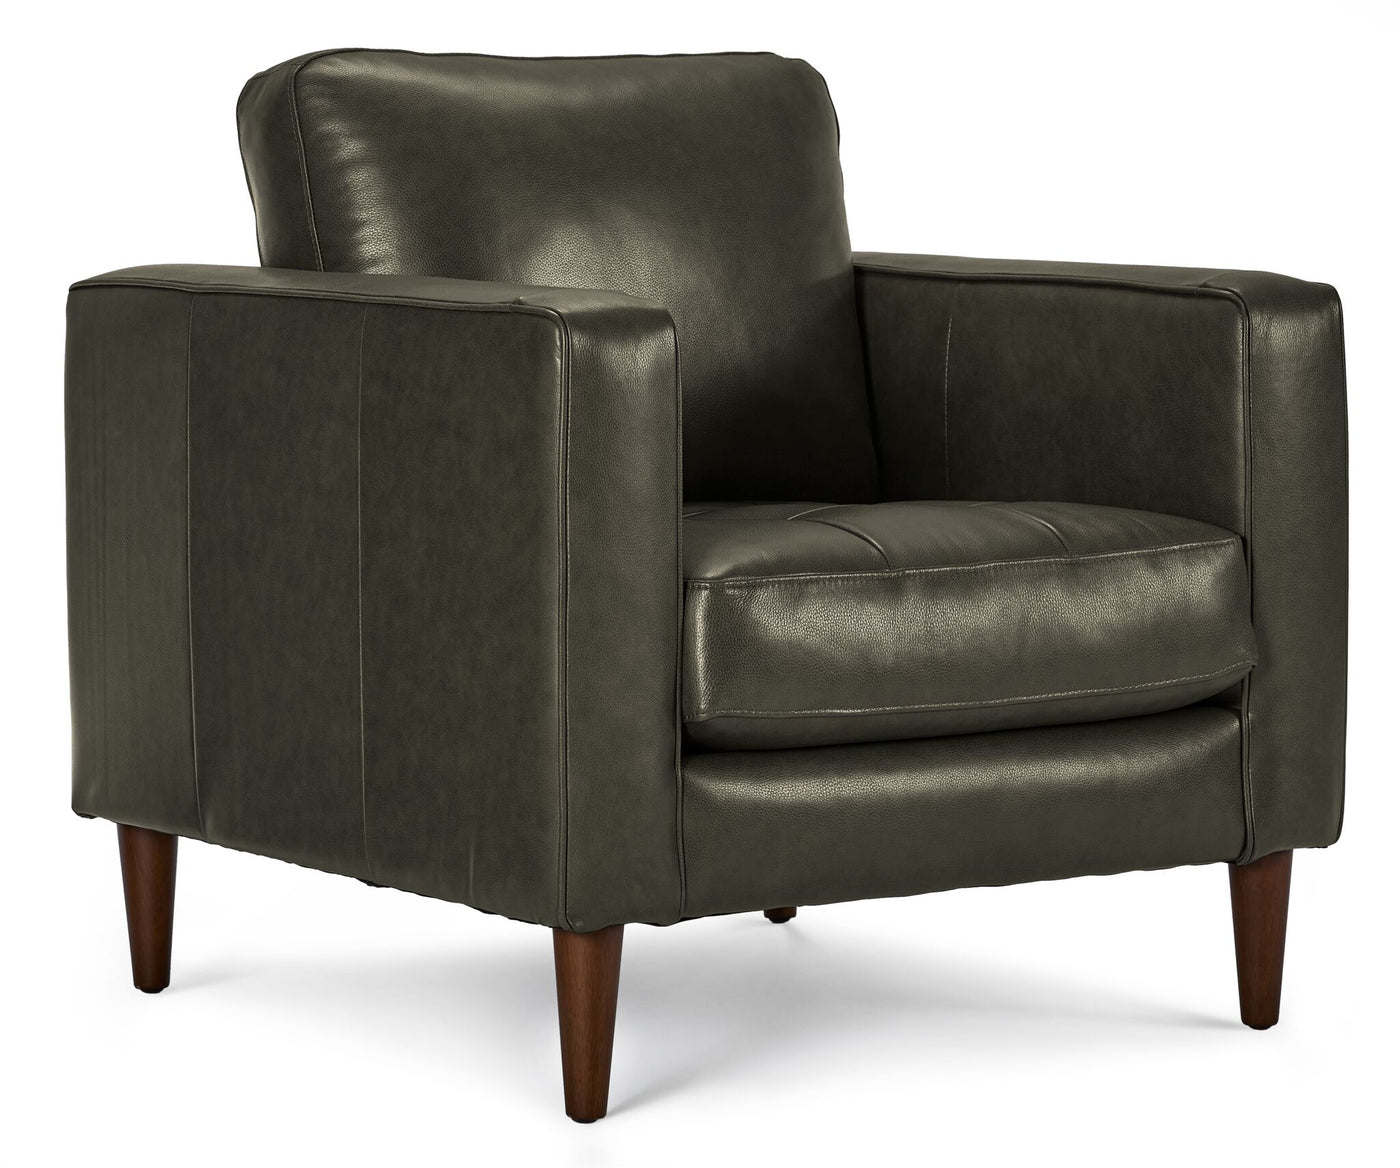 Bari Leather Sofa and Chair Set - Charcoal